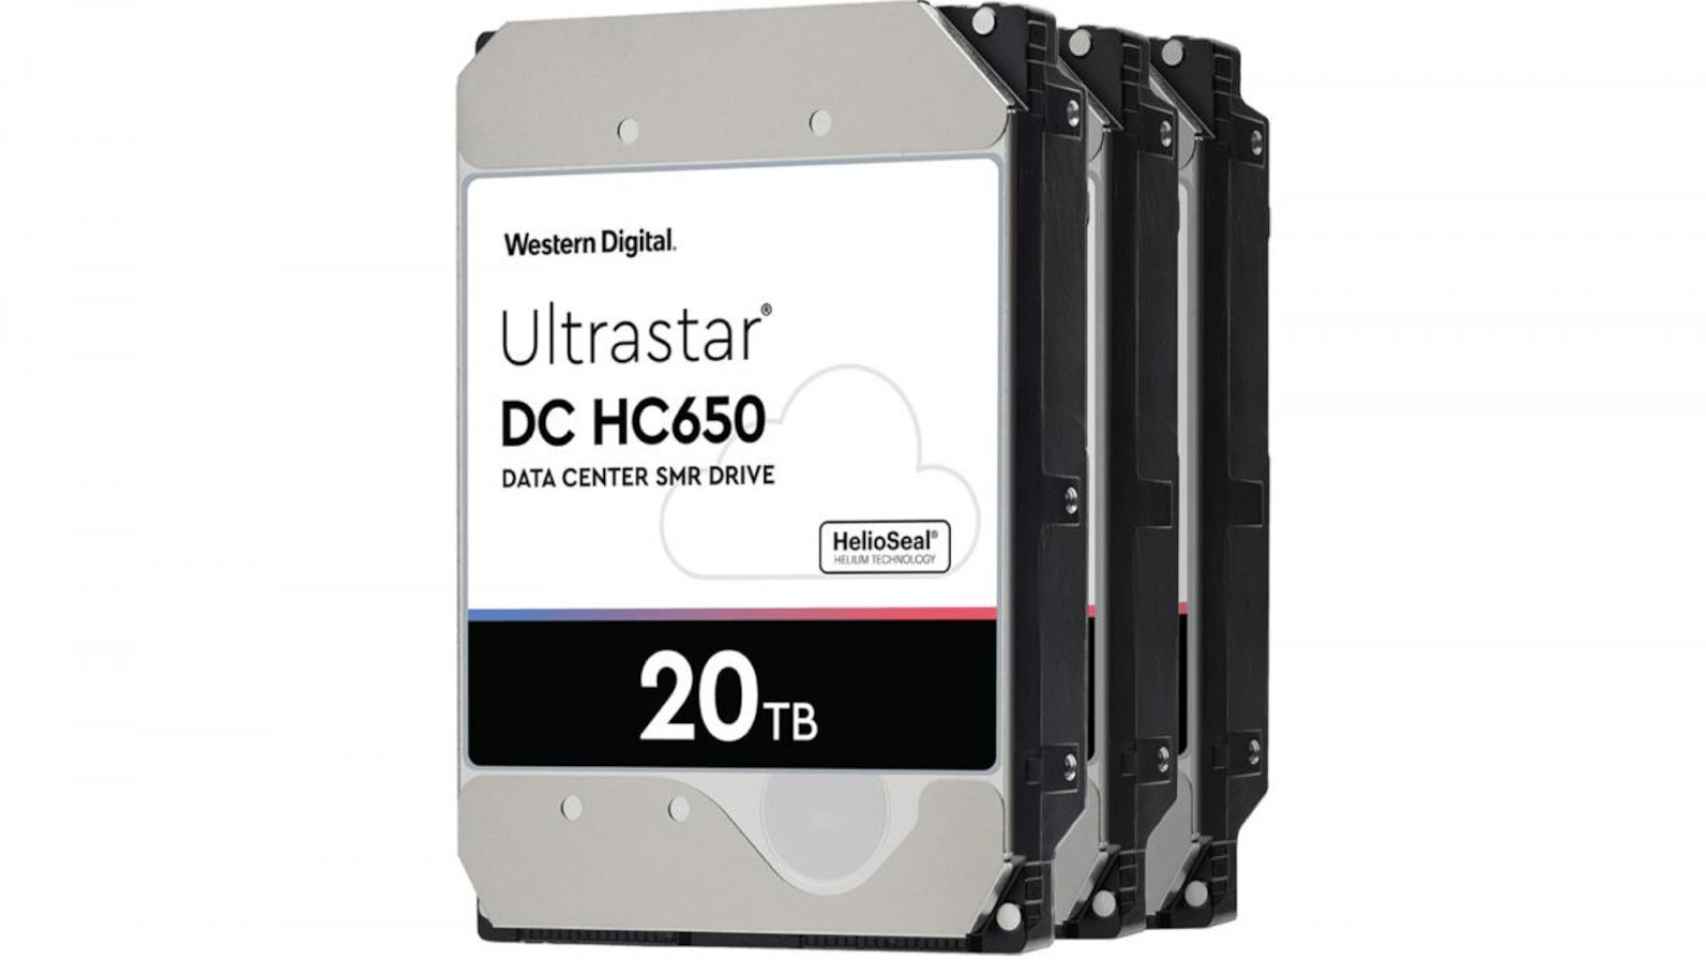 Ultrastar DC HC650